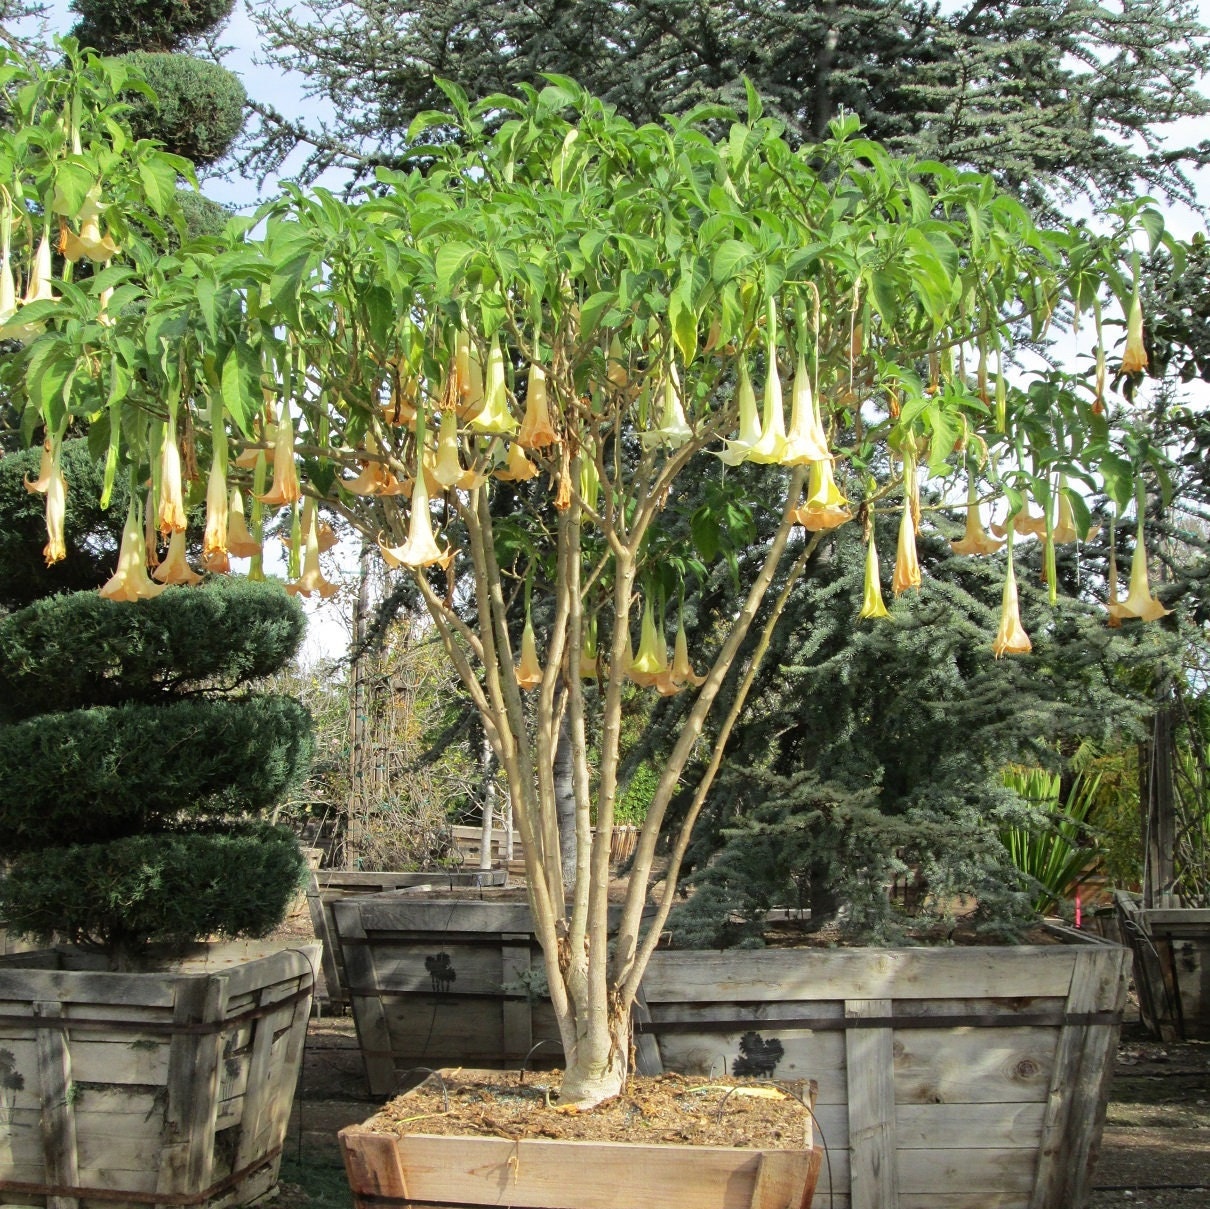 Brugmansia versicolor - Engelstrompete - Pflanze 20-25 cm hoch